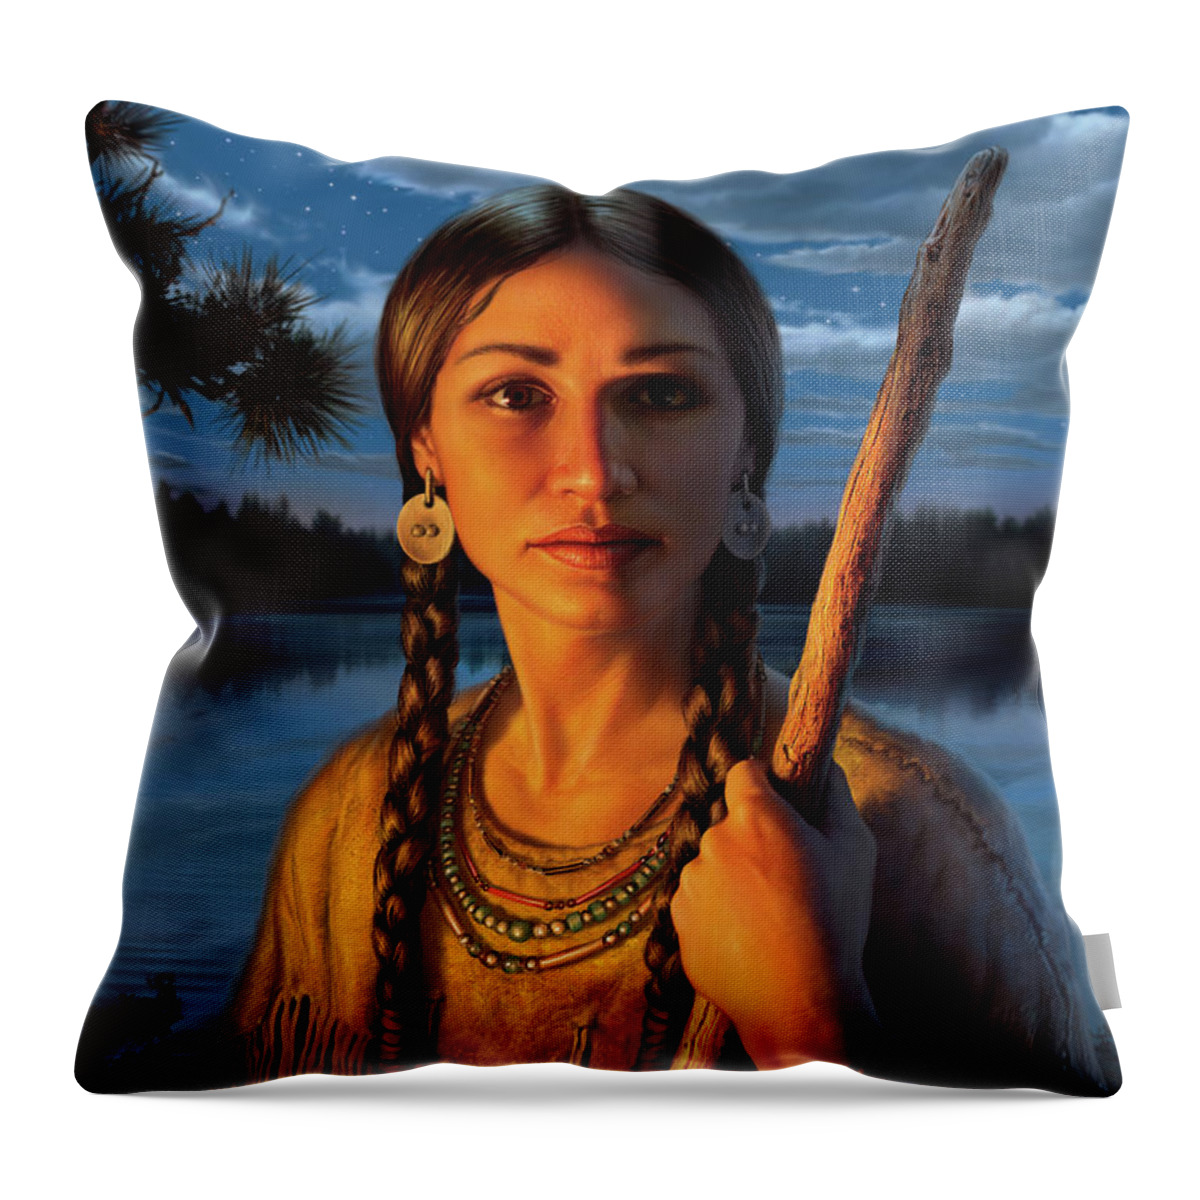 Sacagawea Throw Pillow featuring the digital art Sacagawea by Mark Fredrickson